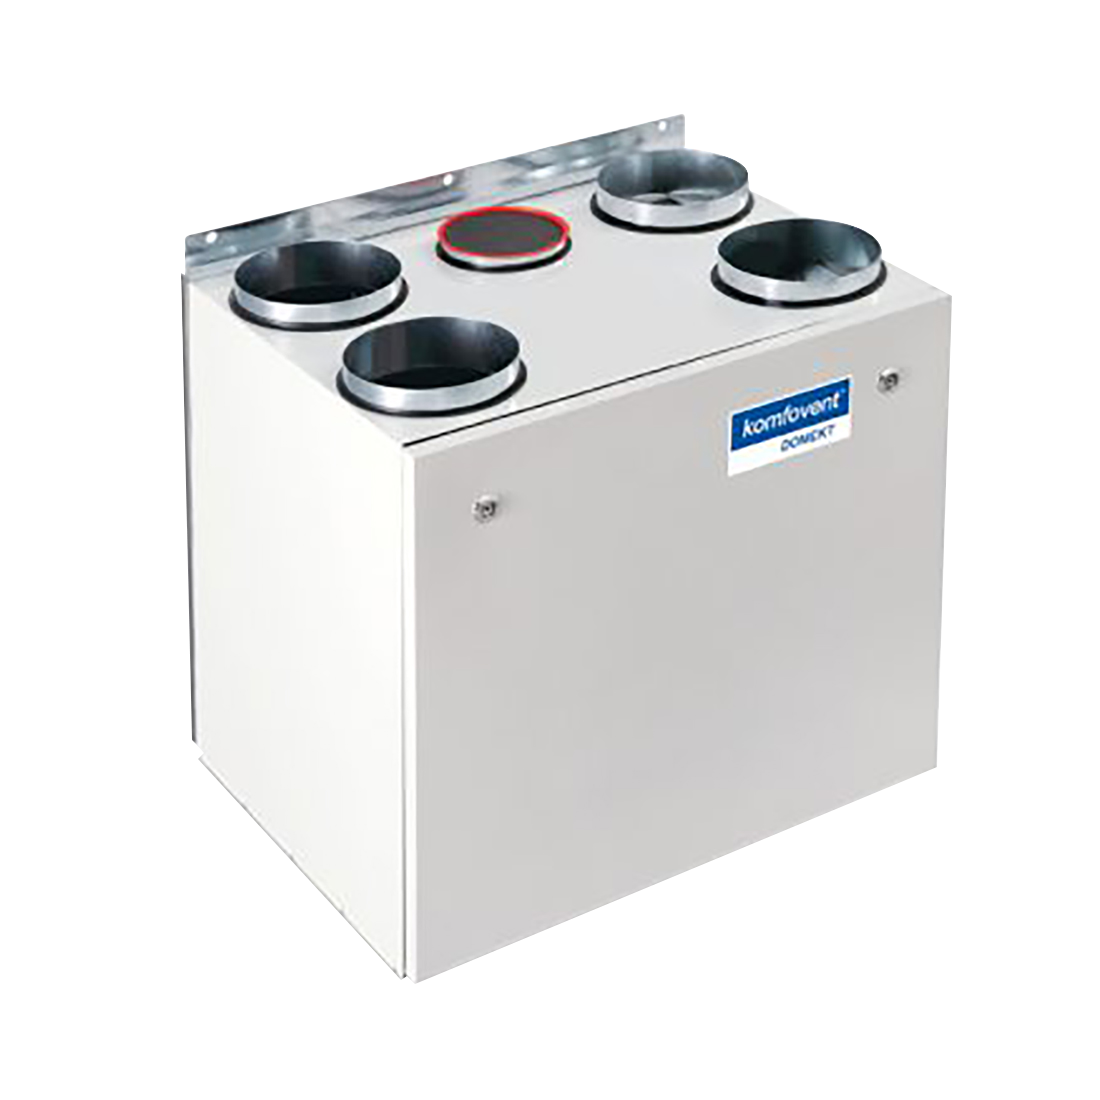 Komfovent Domekt R-450-V Heat Recovery System - Domekt R-450-V